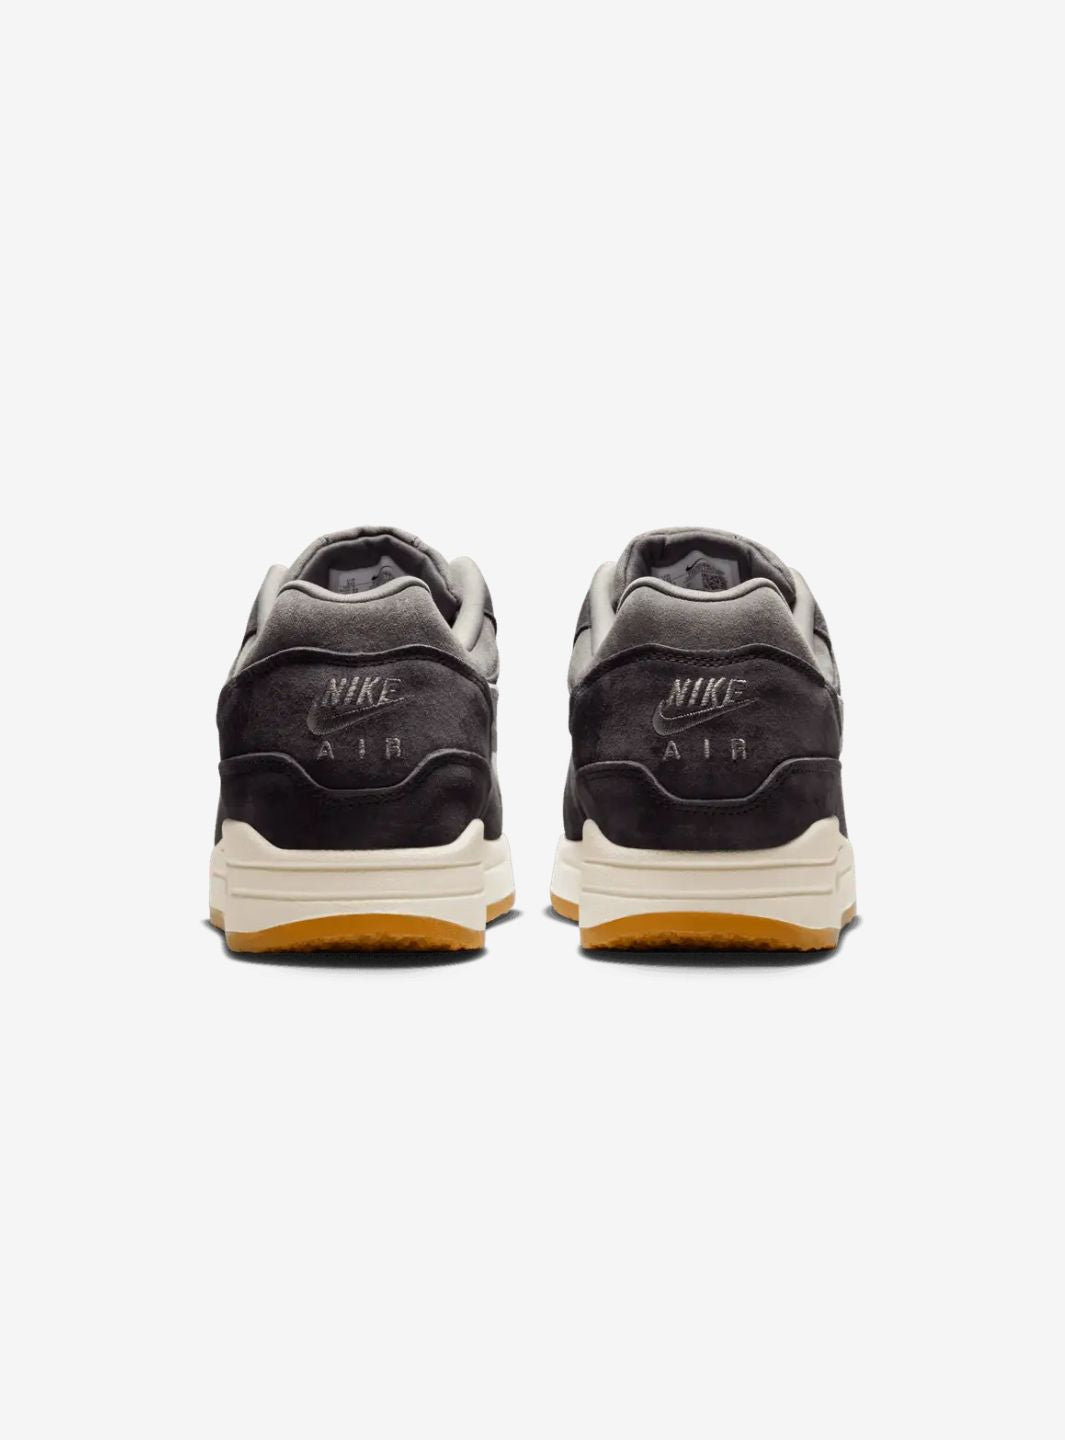 Nike Air Max 1 Crepe Soft Grey - FD5088-001 | ResellZone